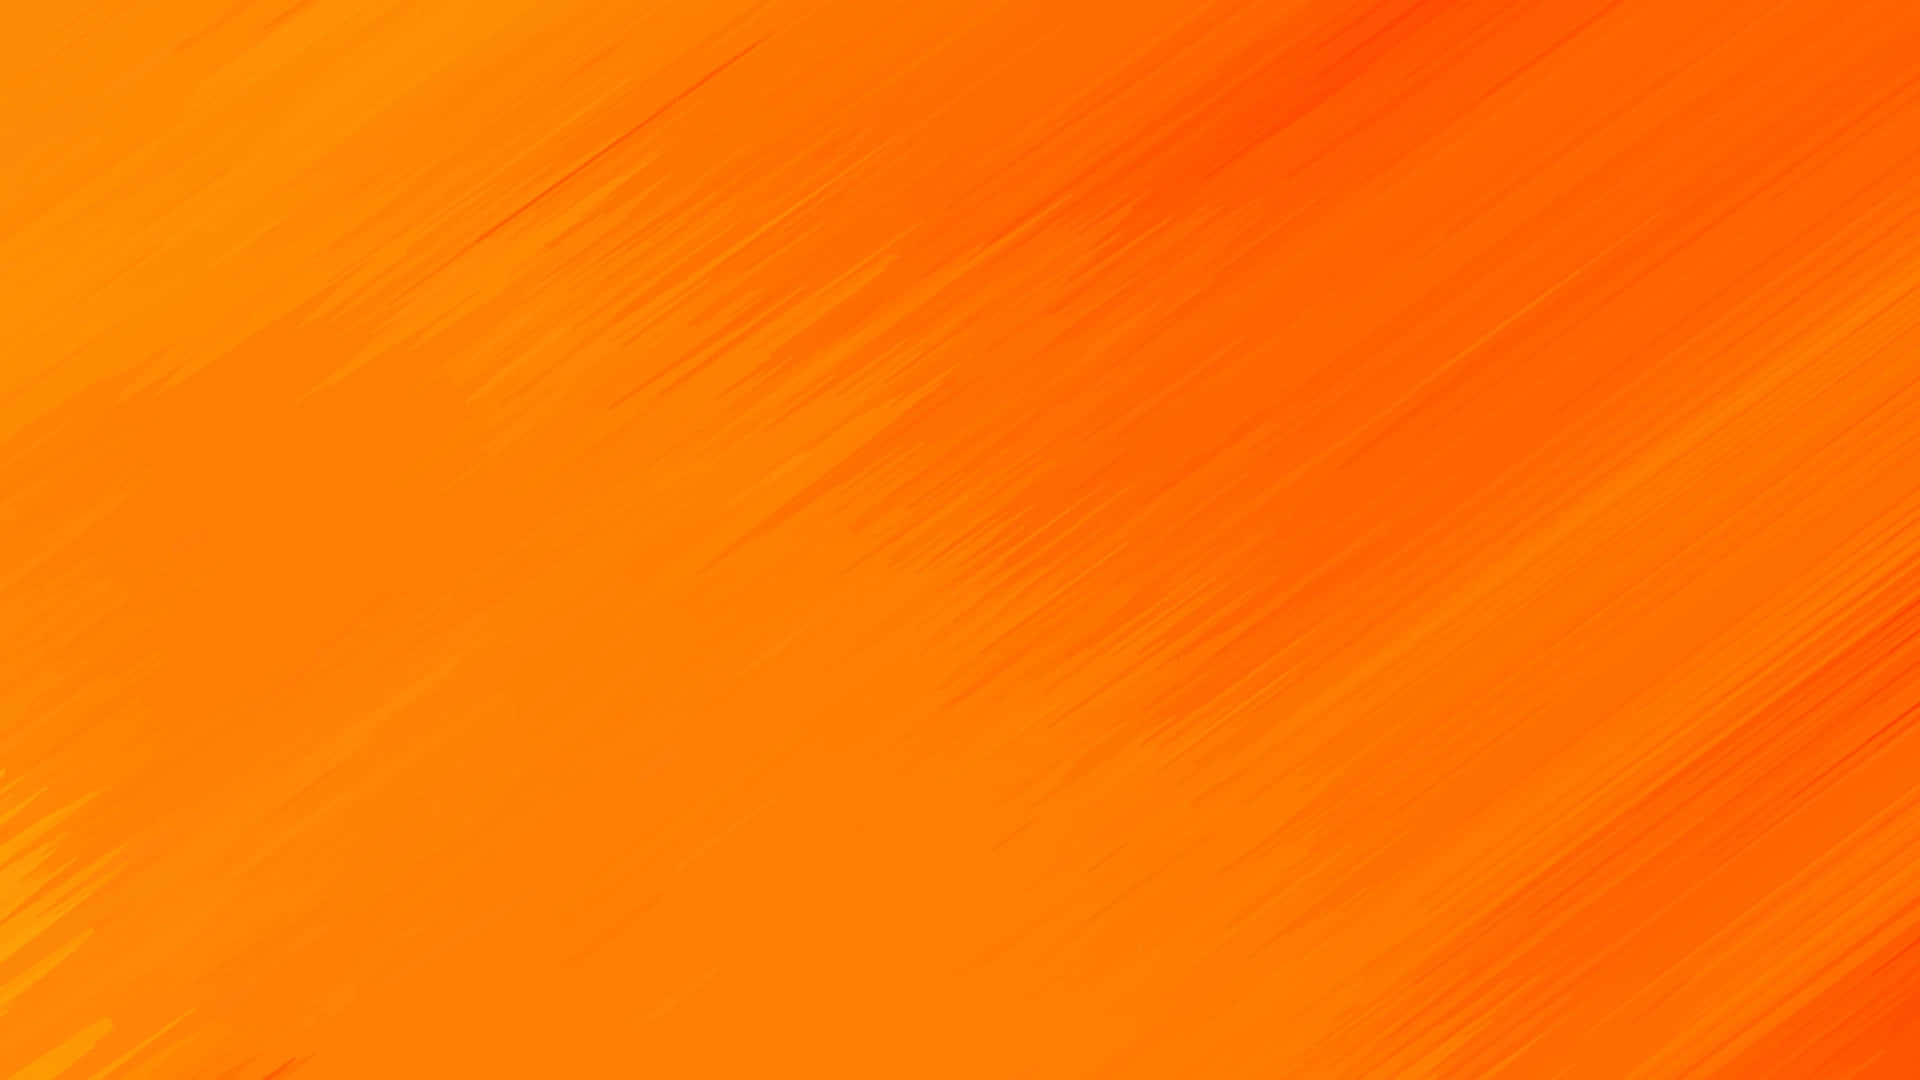 Orangeabstrakt Baggrund Med Et Stribet Mønster. Wallpaper